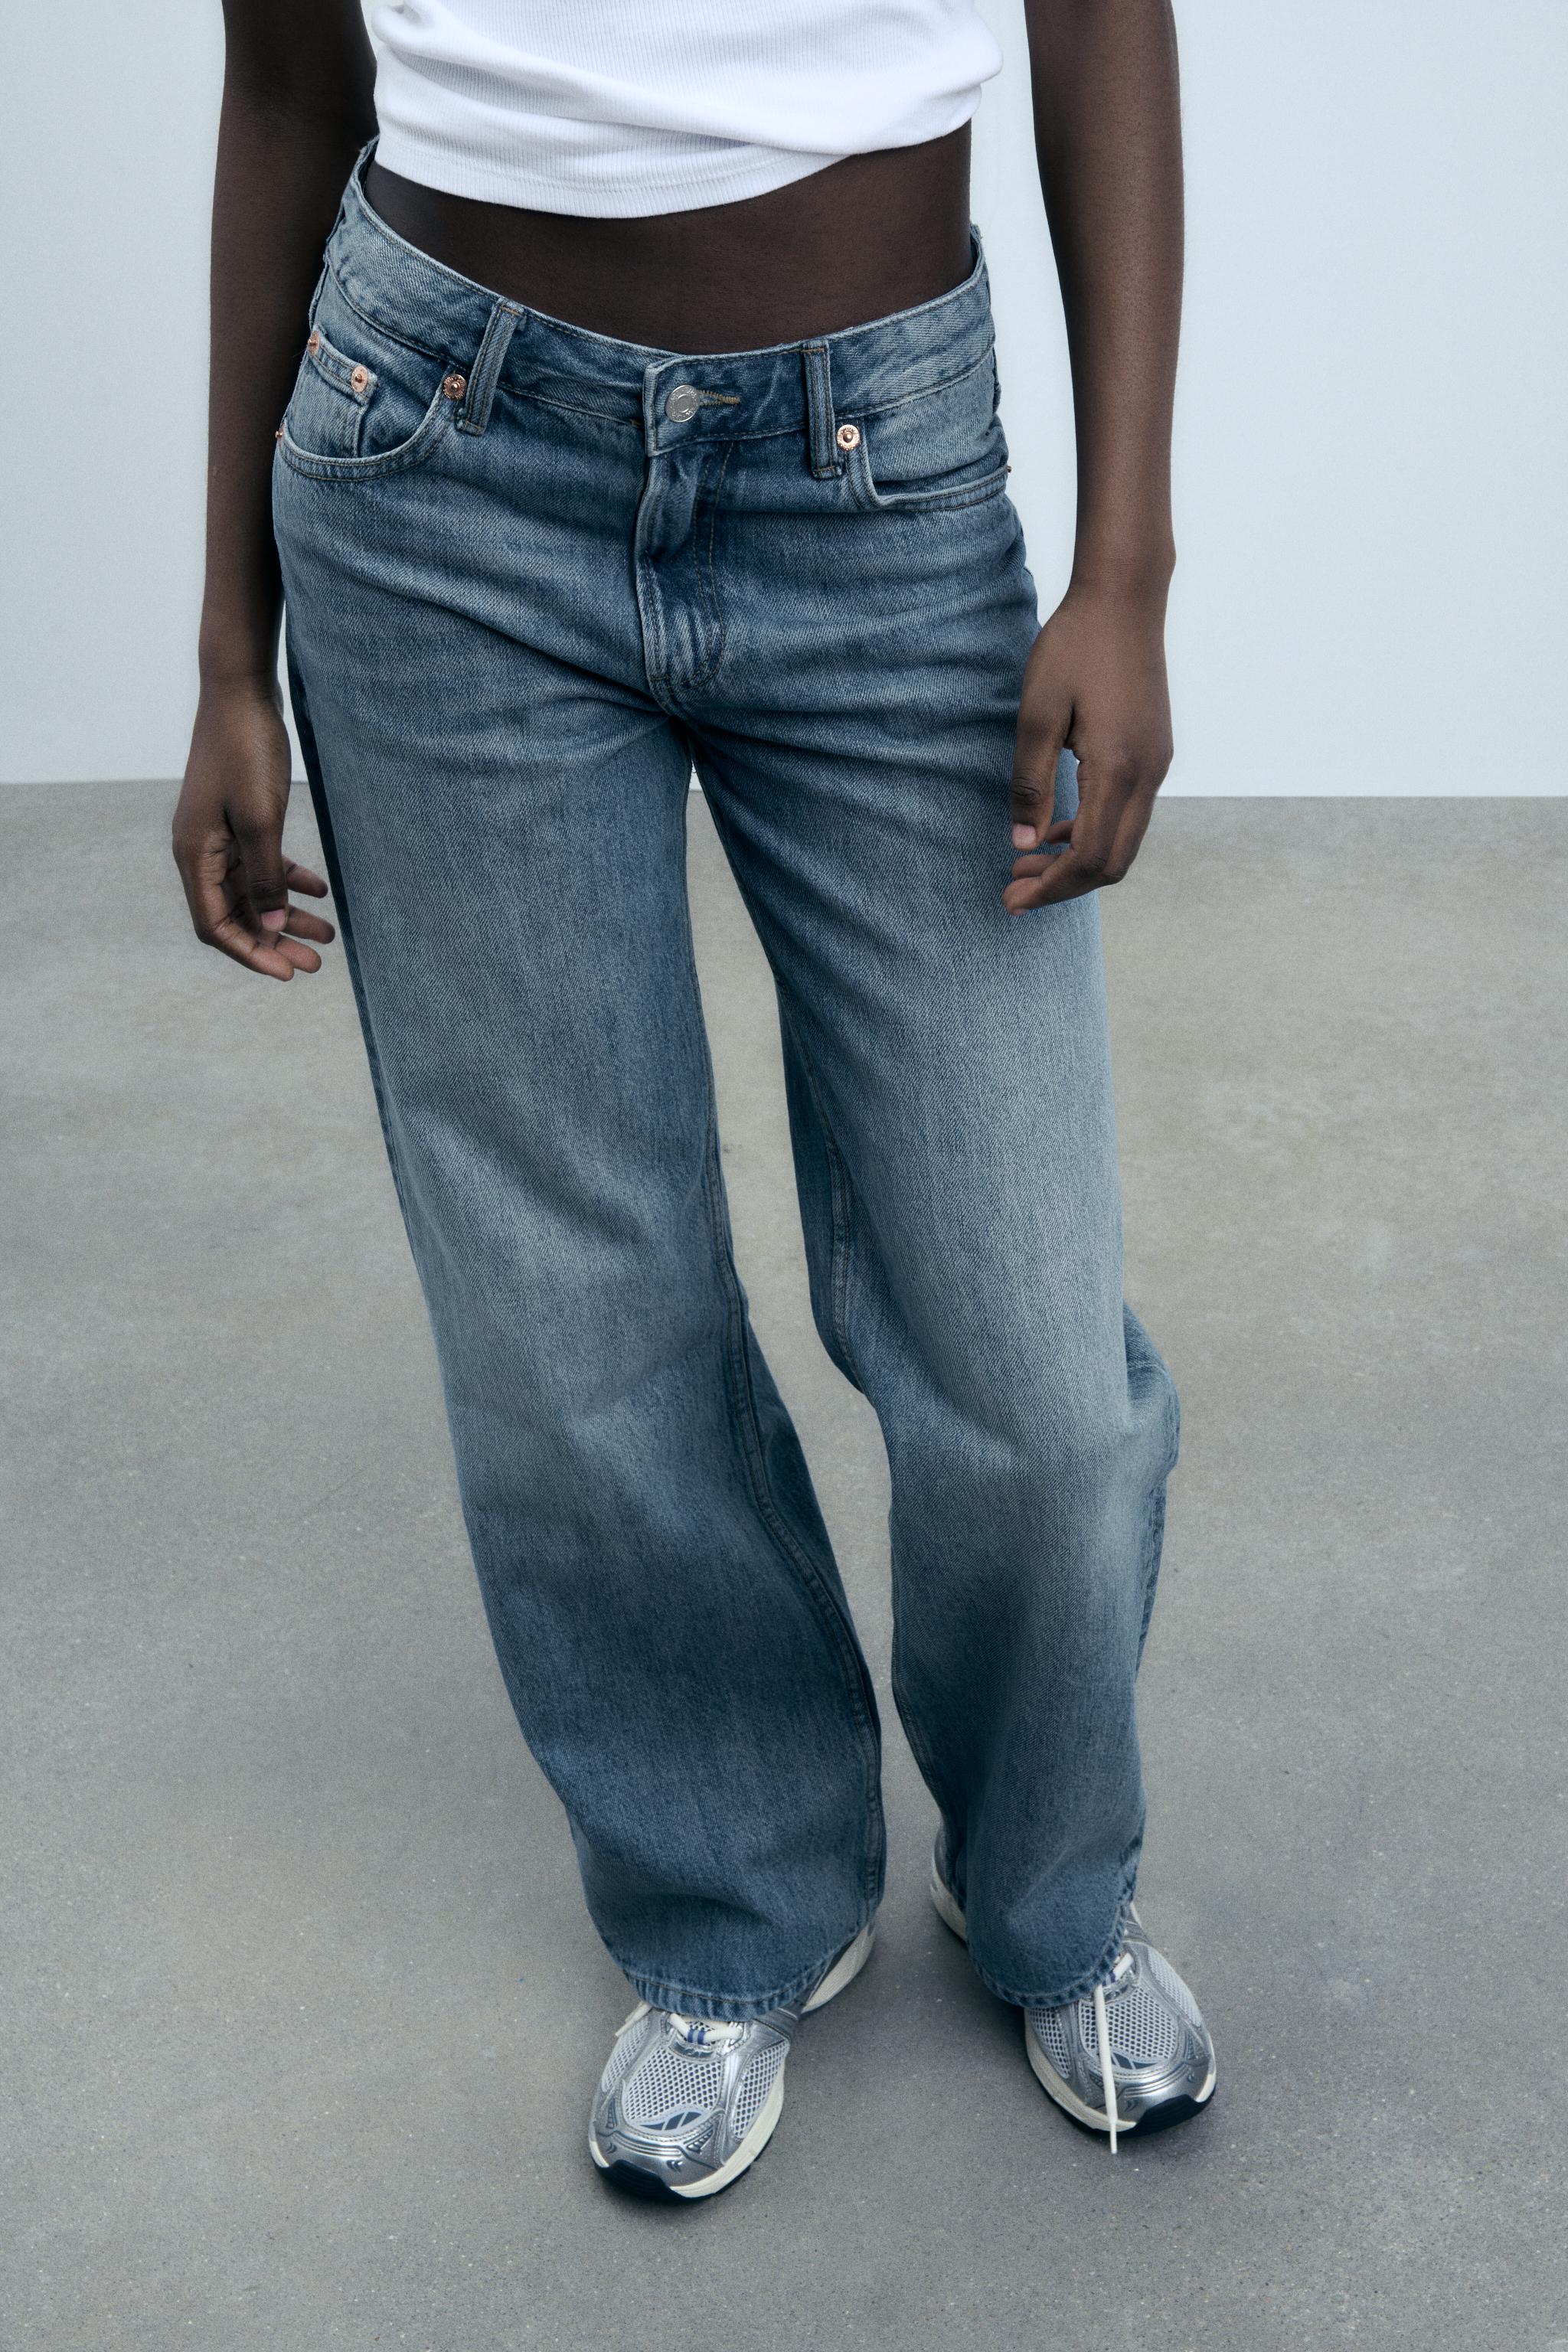 Low Rise Jeans, Buy Women's Low Rise Jeans Online Australia